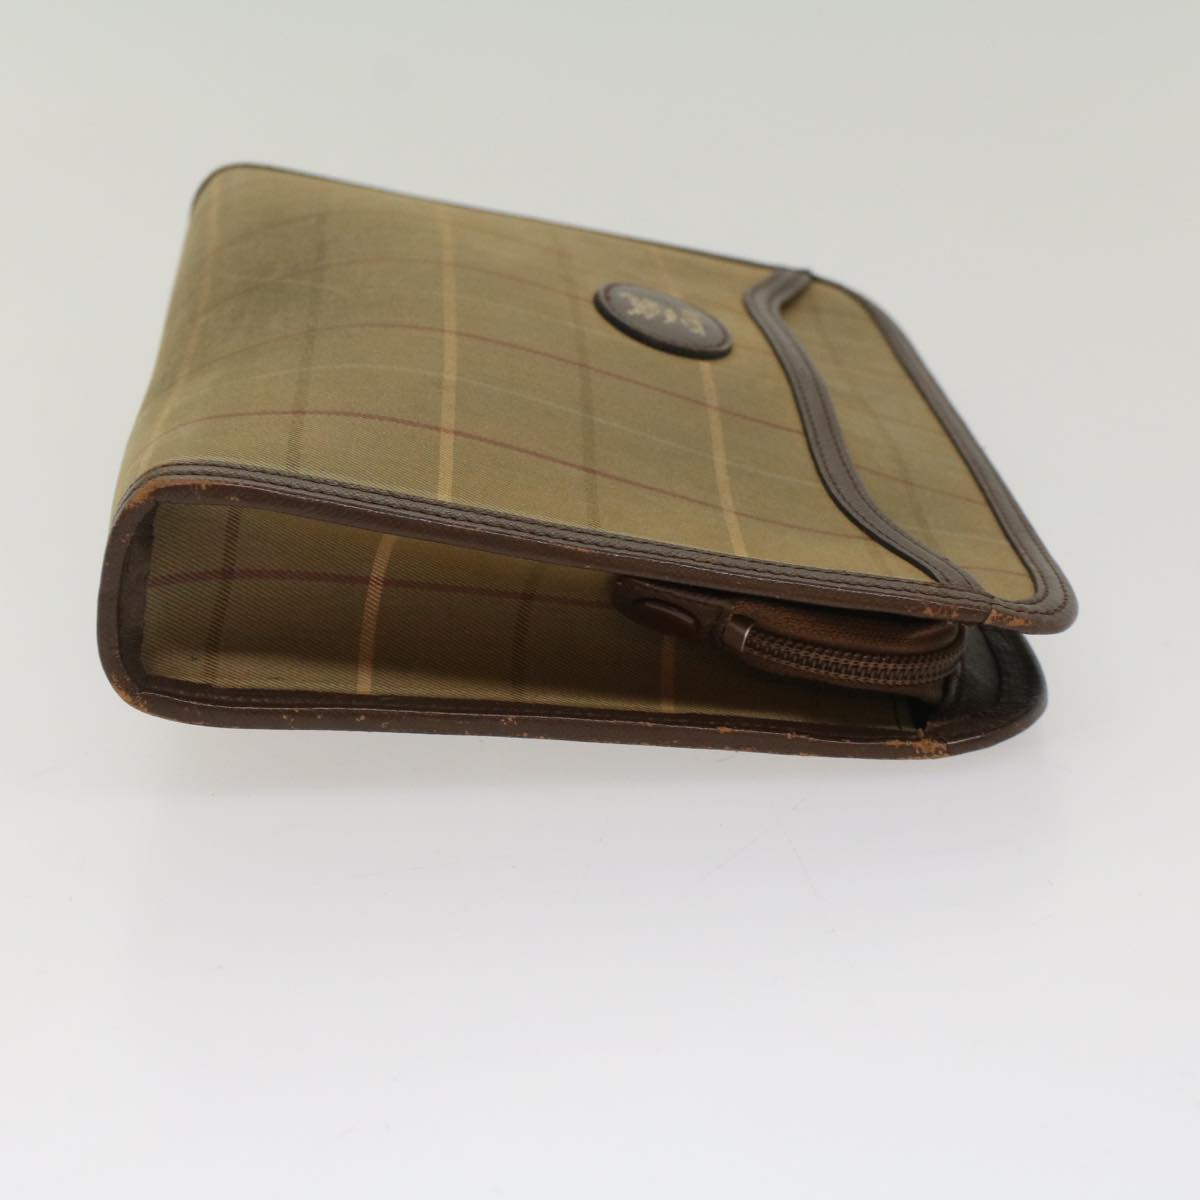 Burberrys Nova Check Clutch Bag Canvas Leather Khaki Brown Auth hk820